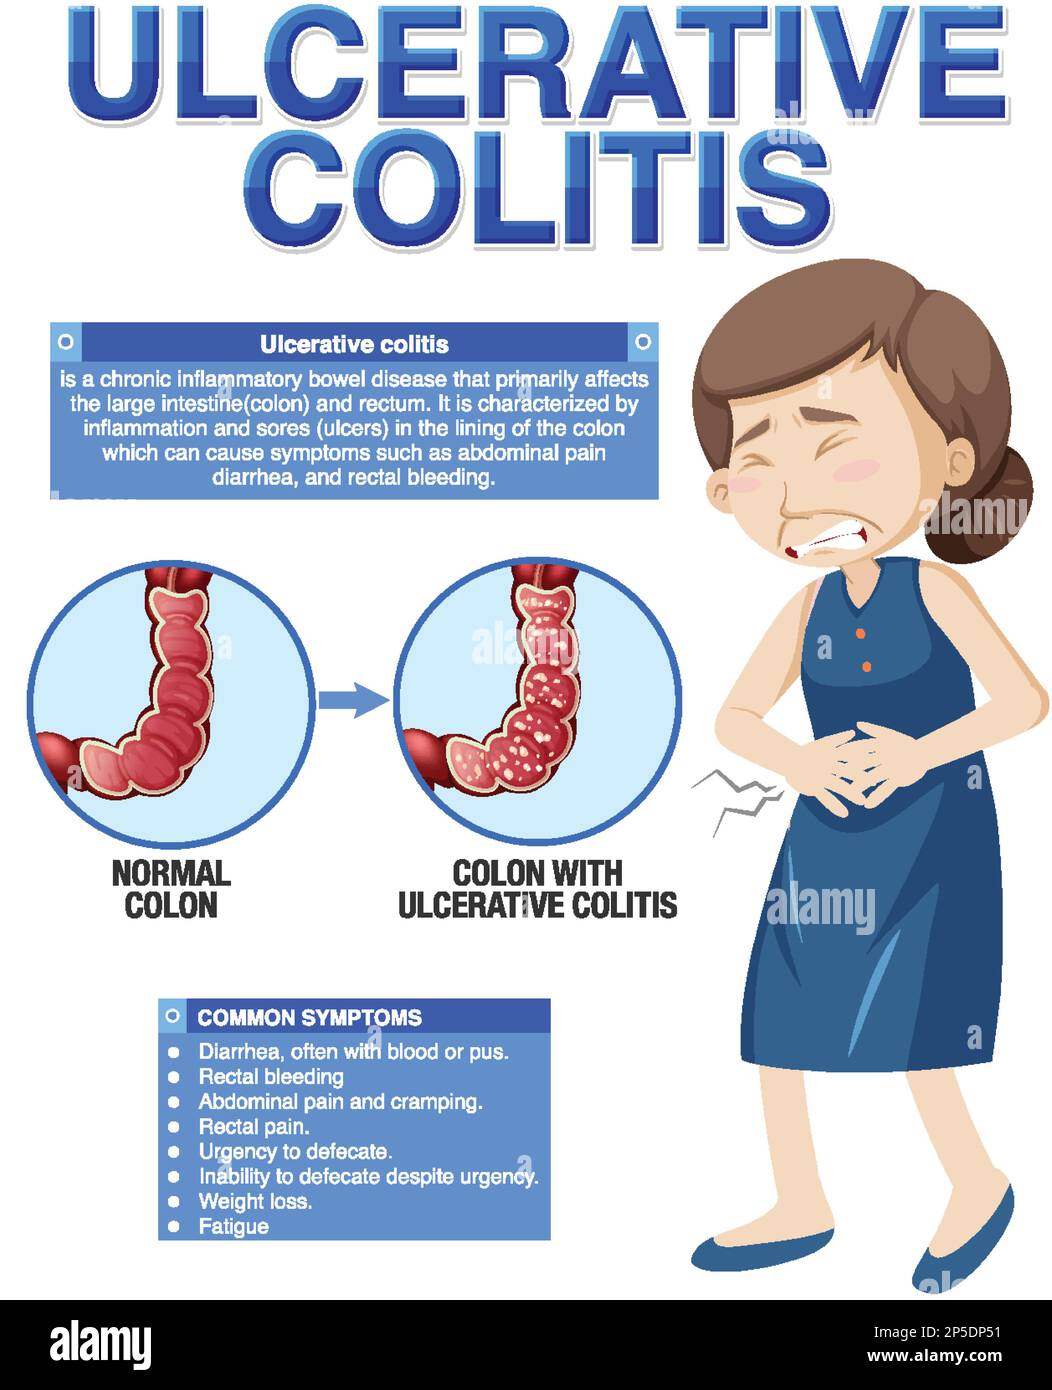 Ulcerative Colitis Symptoms Infographic illustration Stock Vector